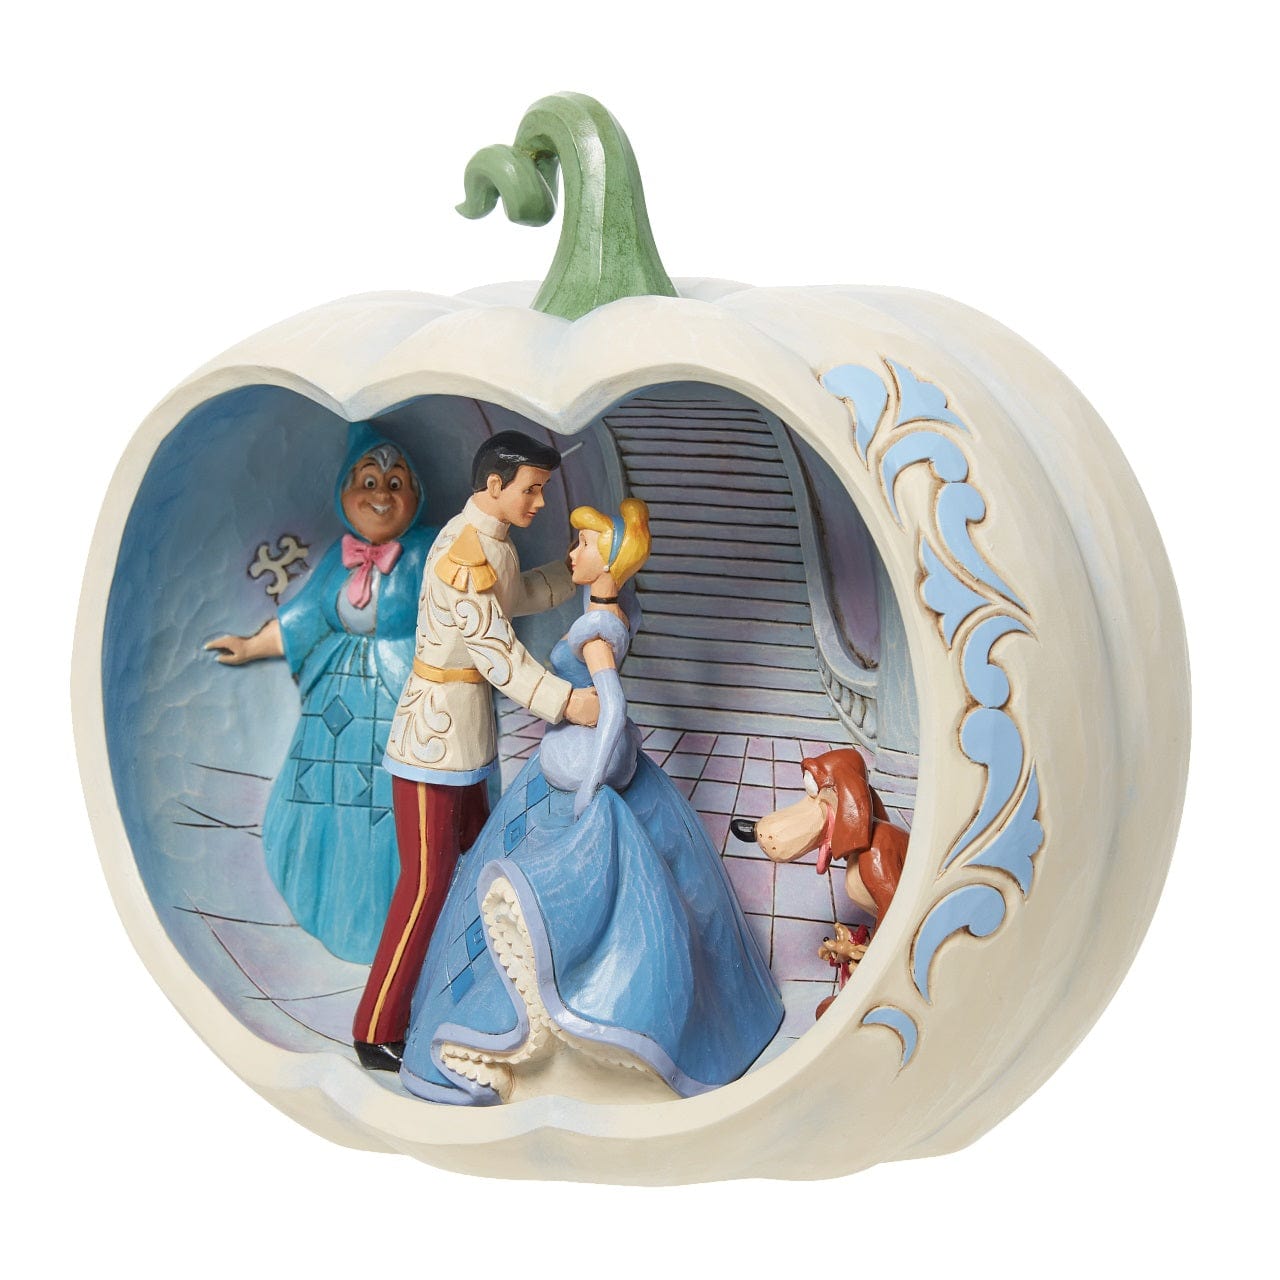 Enesco Disney Ornament Disney Traditions Figurine - Cinderella - Love at First Sight